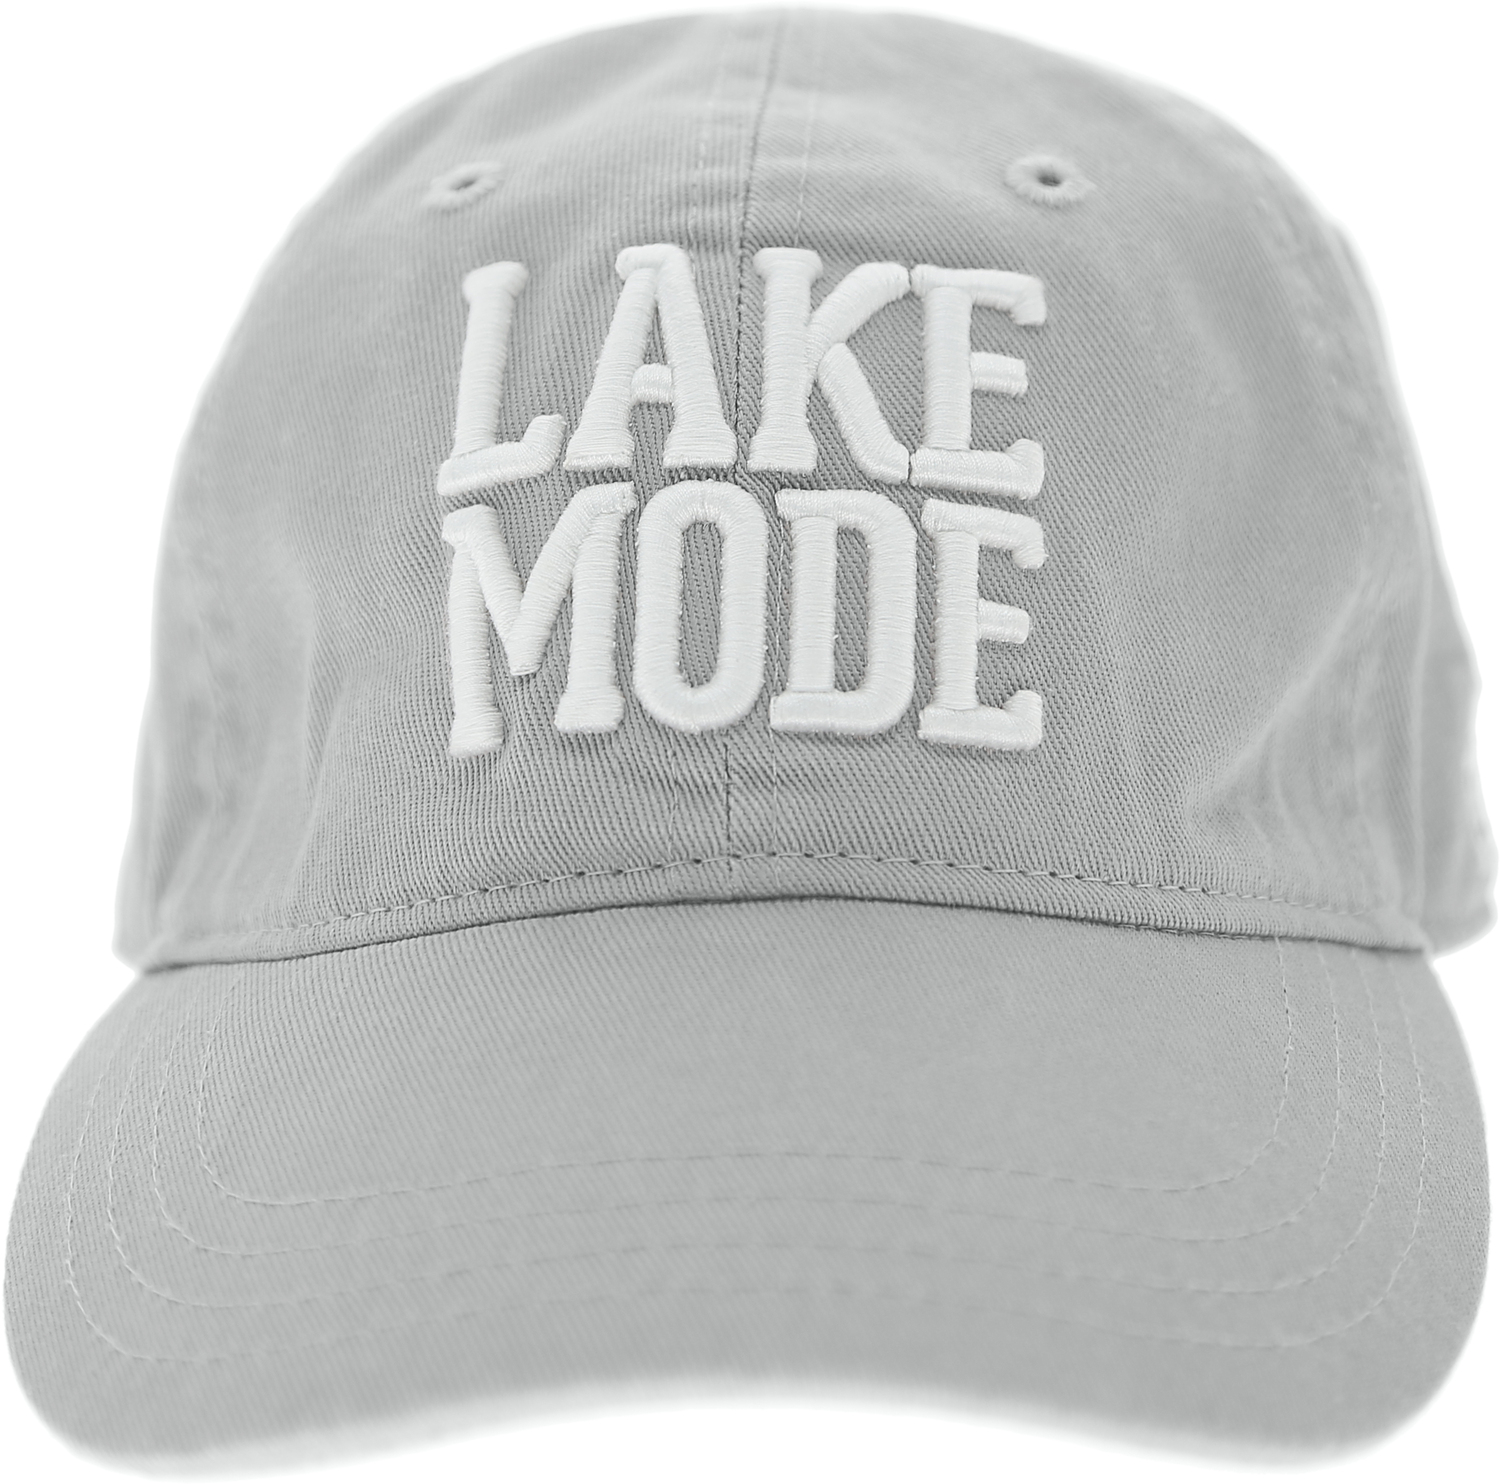 Lake Mode by We People - Lake Mode - Light Gray Adjustable Hat